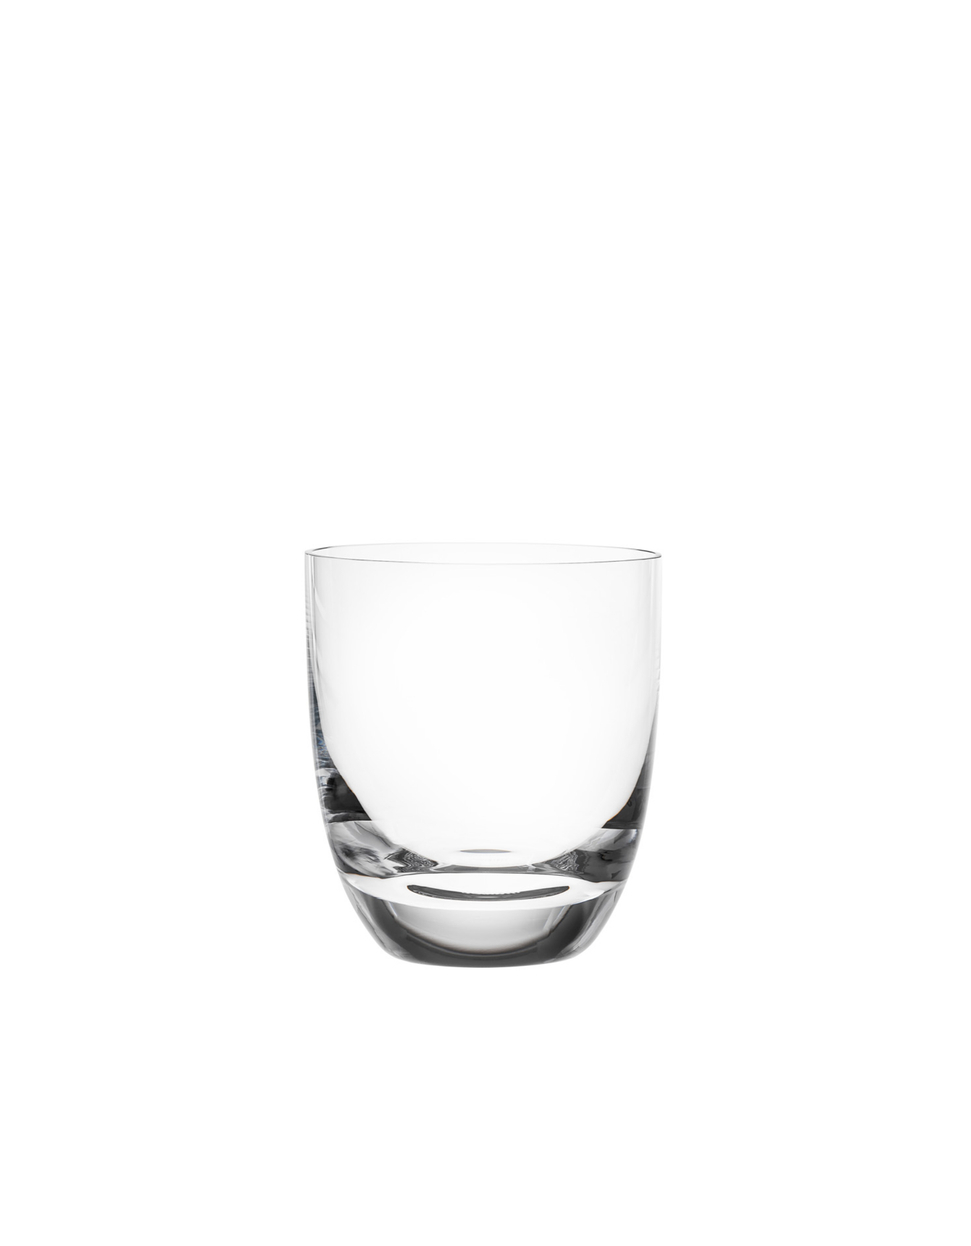 Harmony sklenice, 250 ml